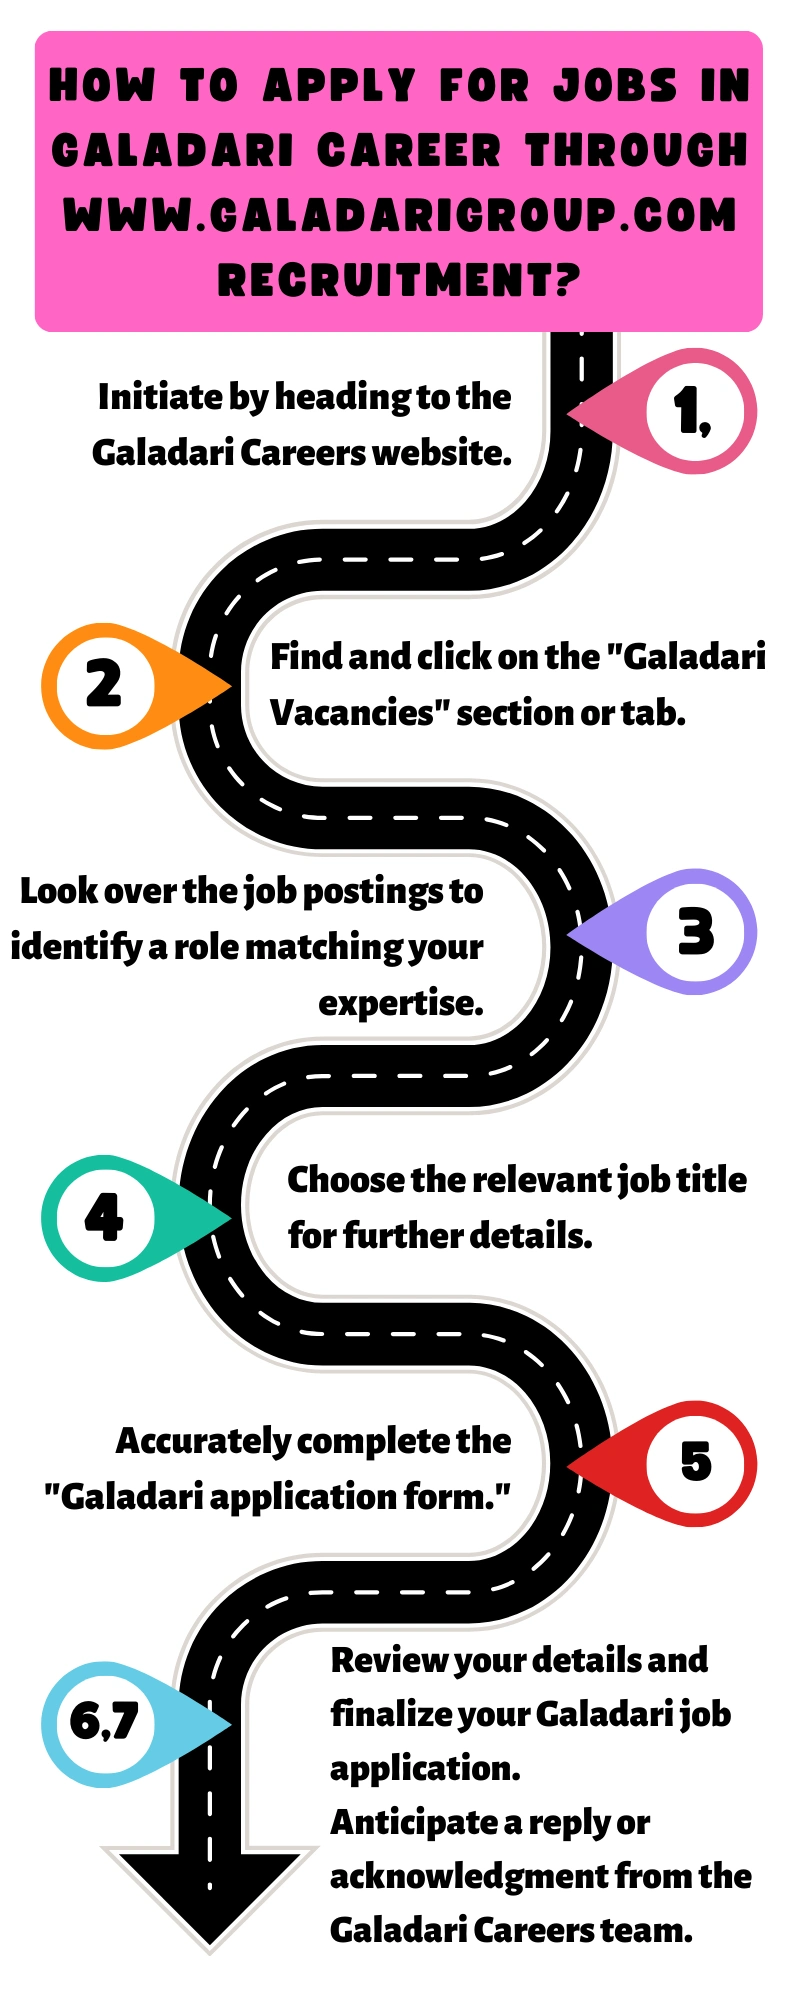 How to Apply for Jobs in Galadari Career through www.galadarigroup.com recruitment?